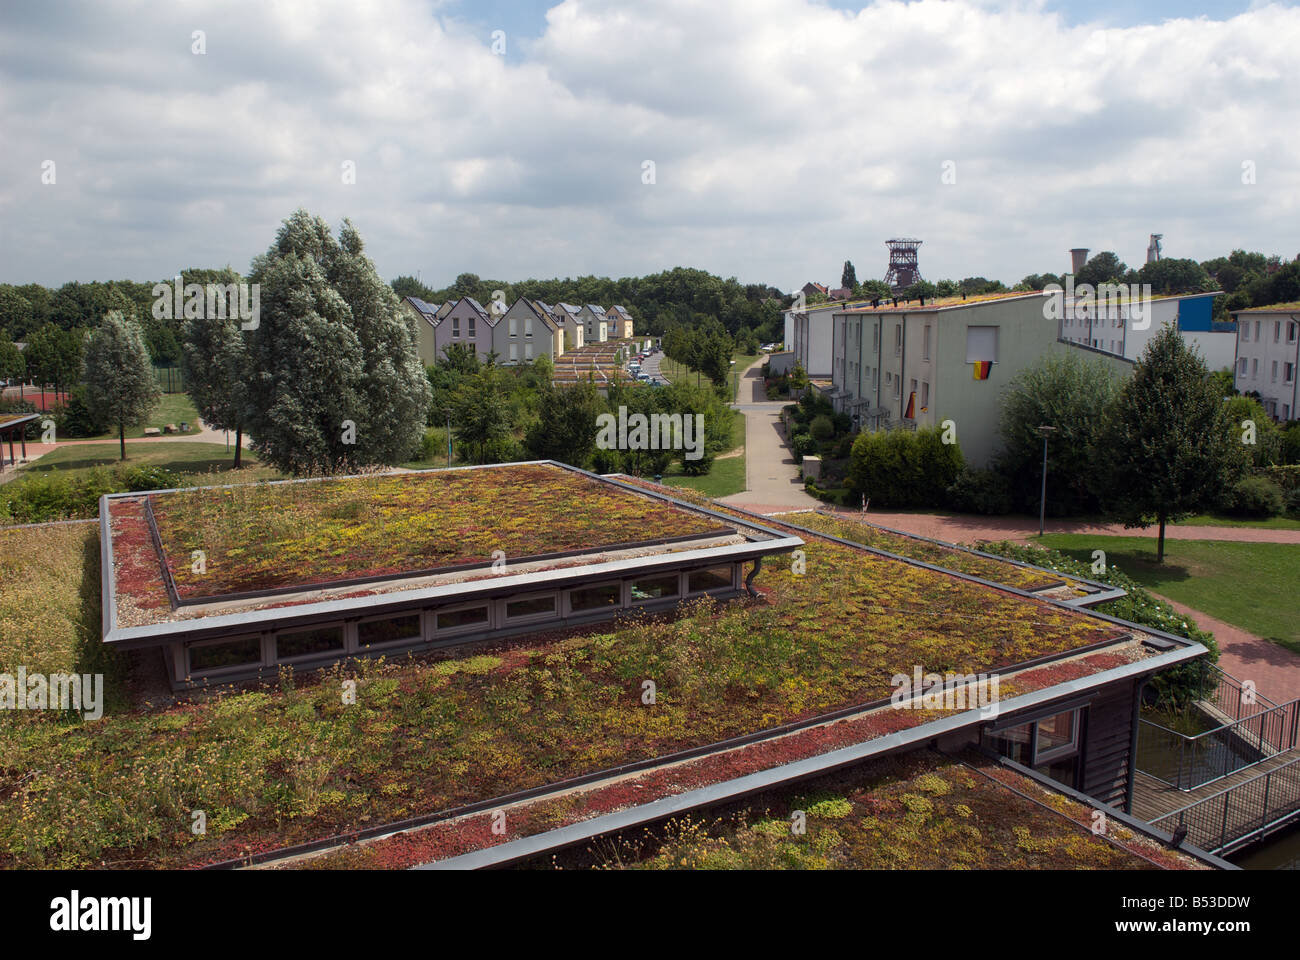 Sedum or 'living roof' on a school classroom in Gelsenkirchen, North Rhine-Westphalia, Germany. Stock Photo